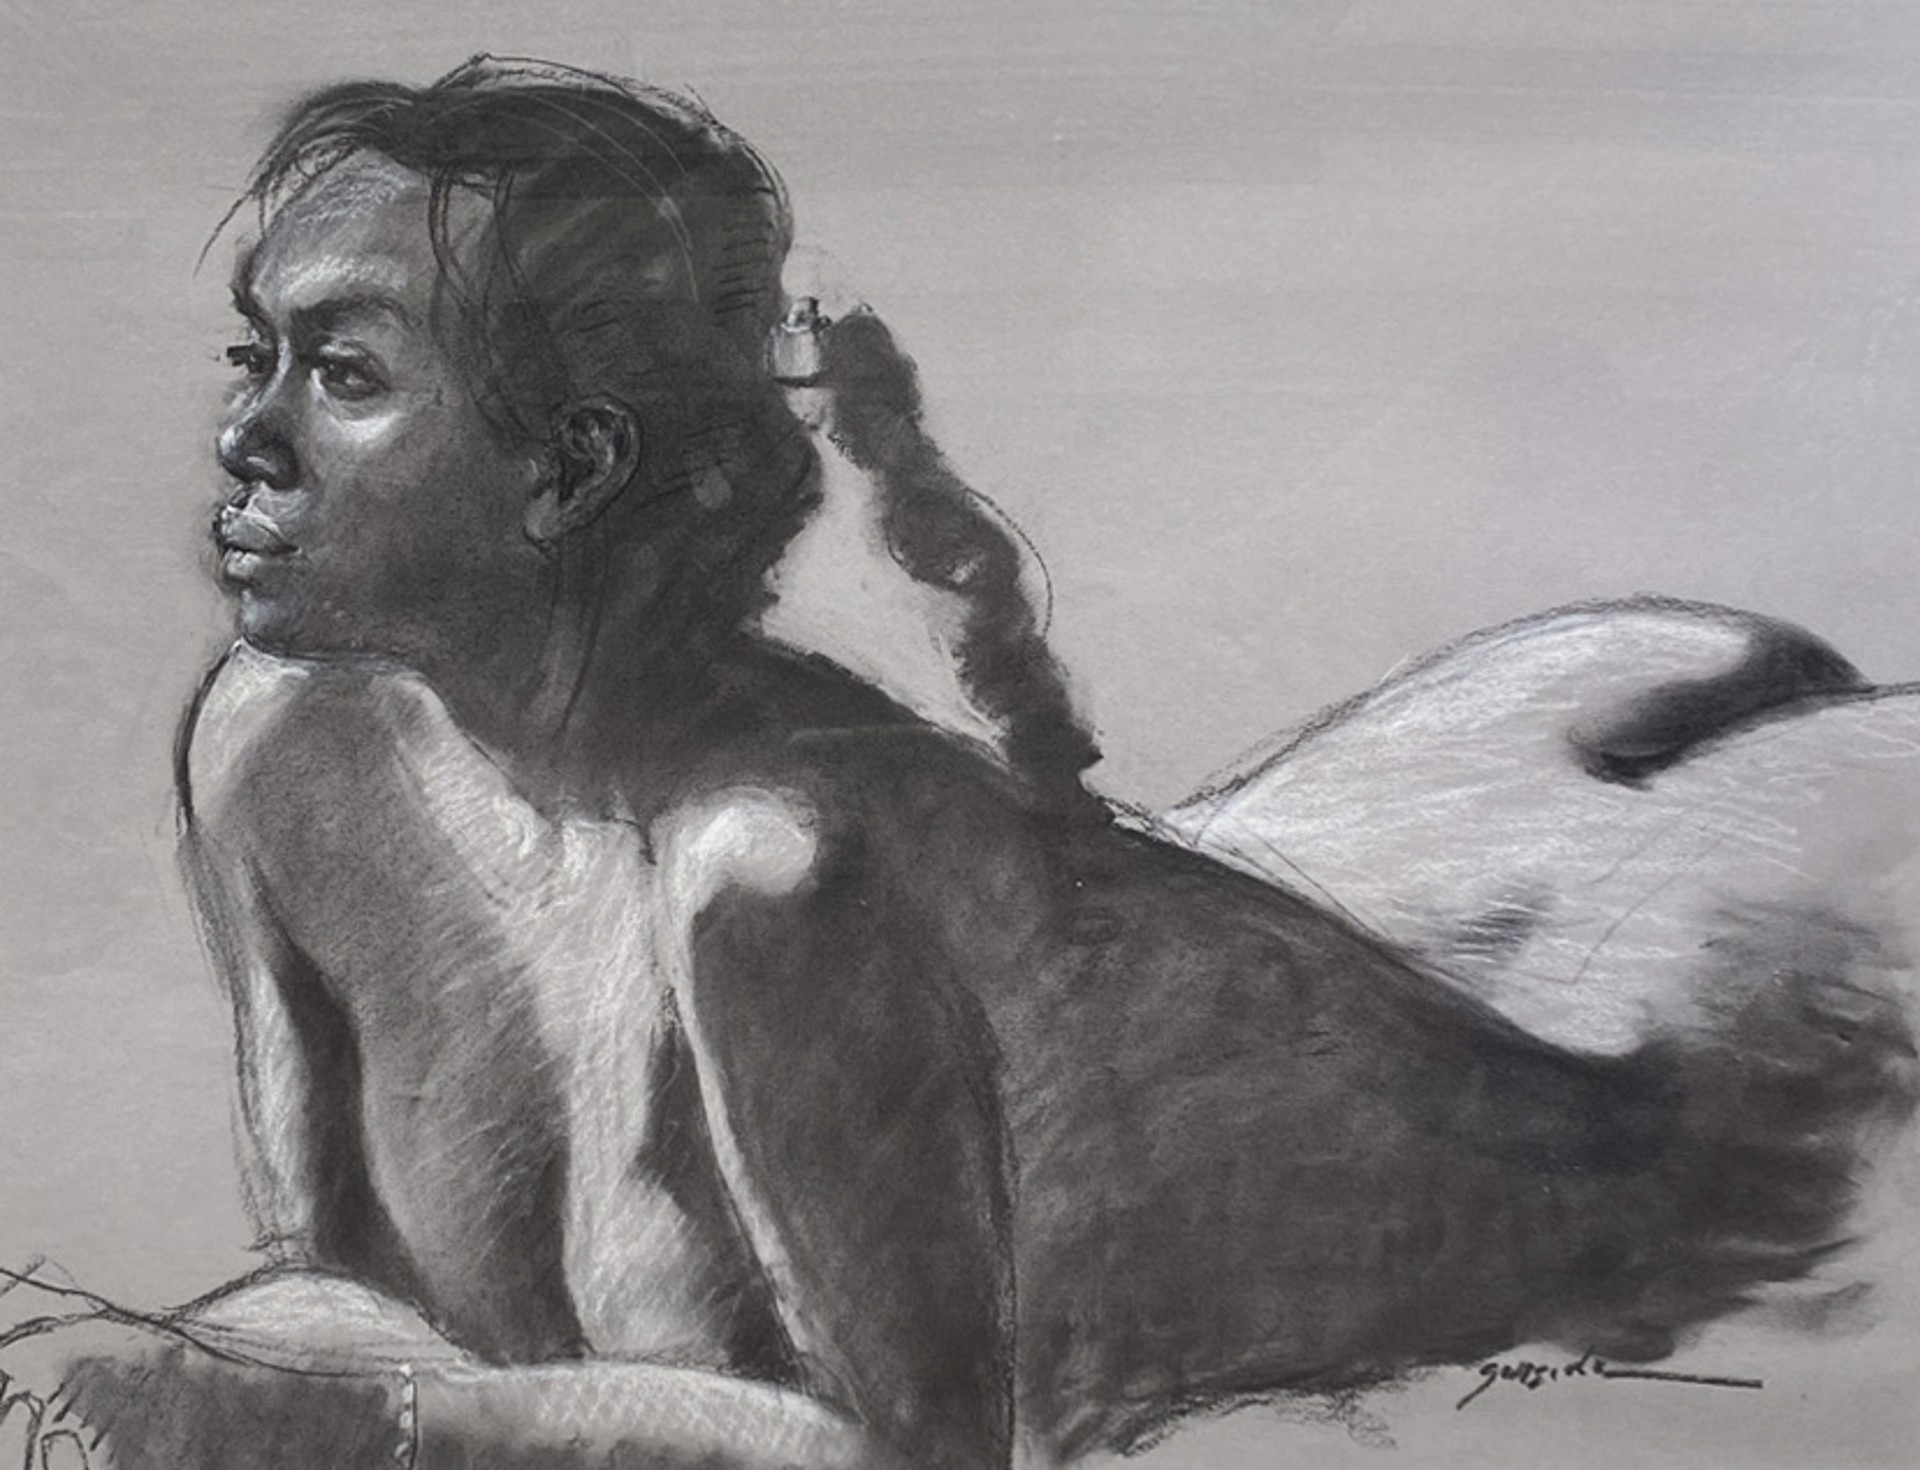 Nude Lady Relaxing by A. LaMoyne Garside